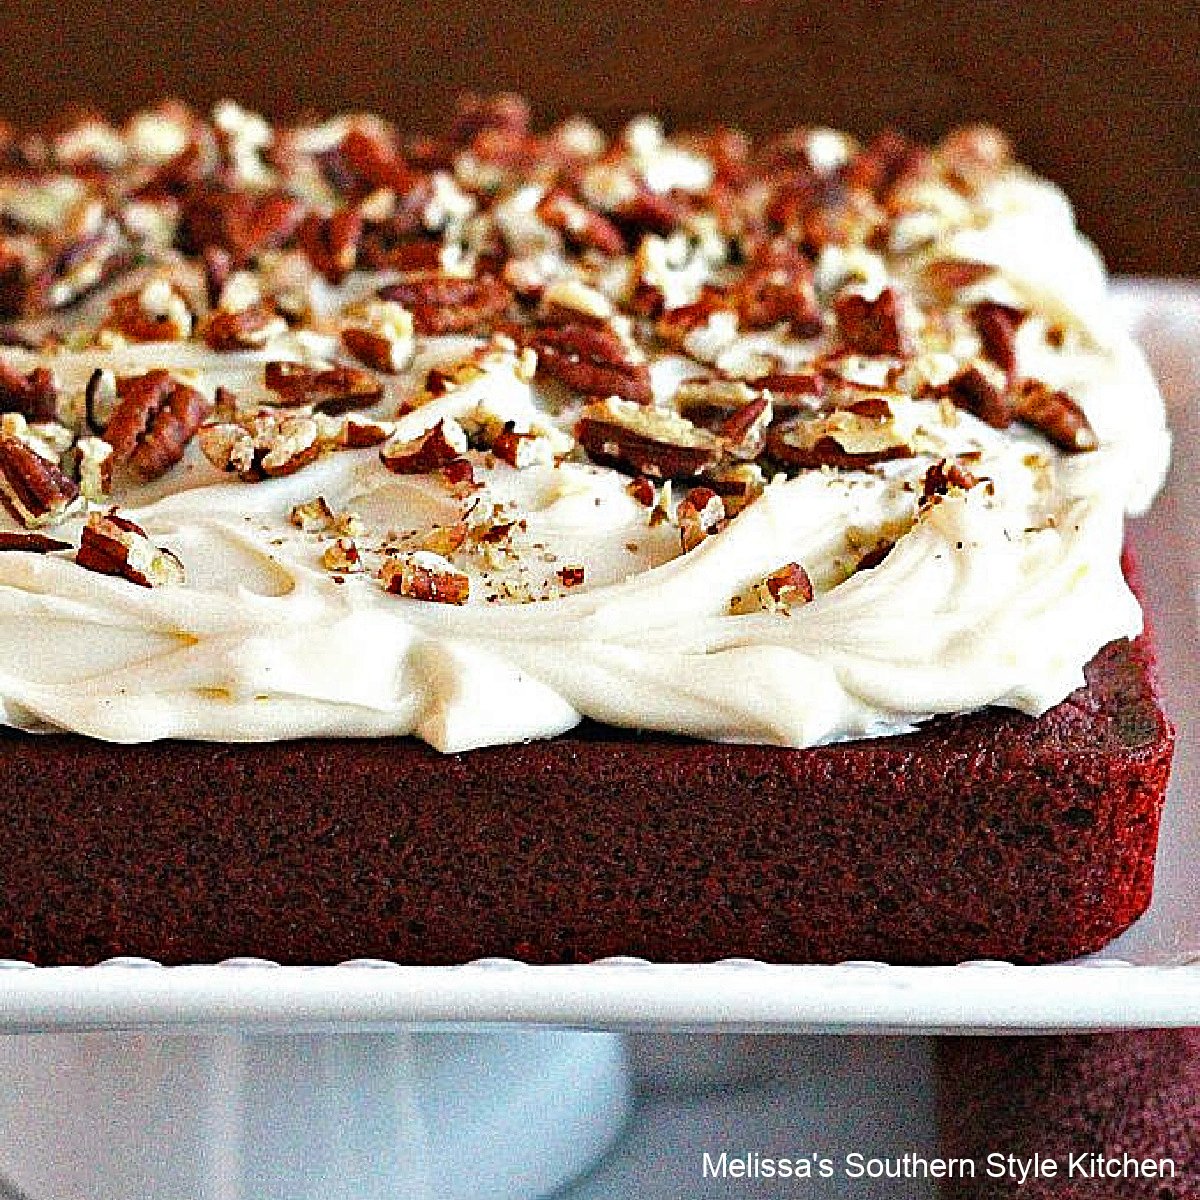 Premium Photo  Red velvet cake cream biscuit sweet dessert treat meal snack  on the table